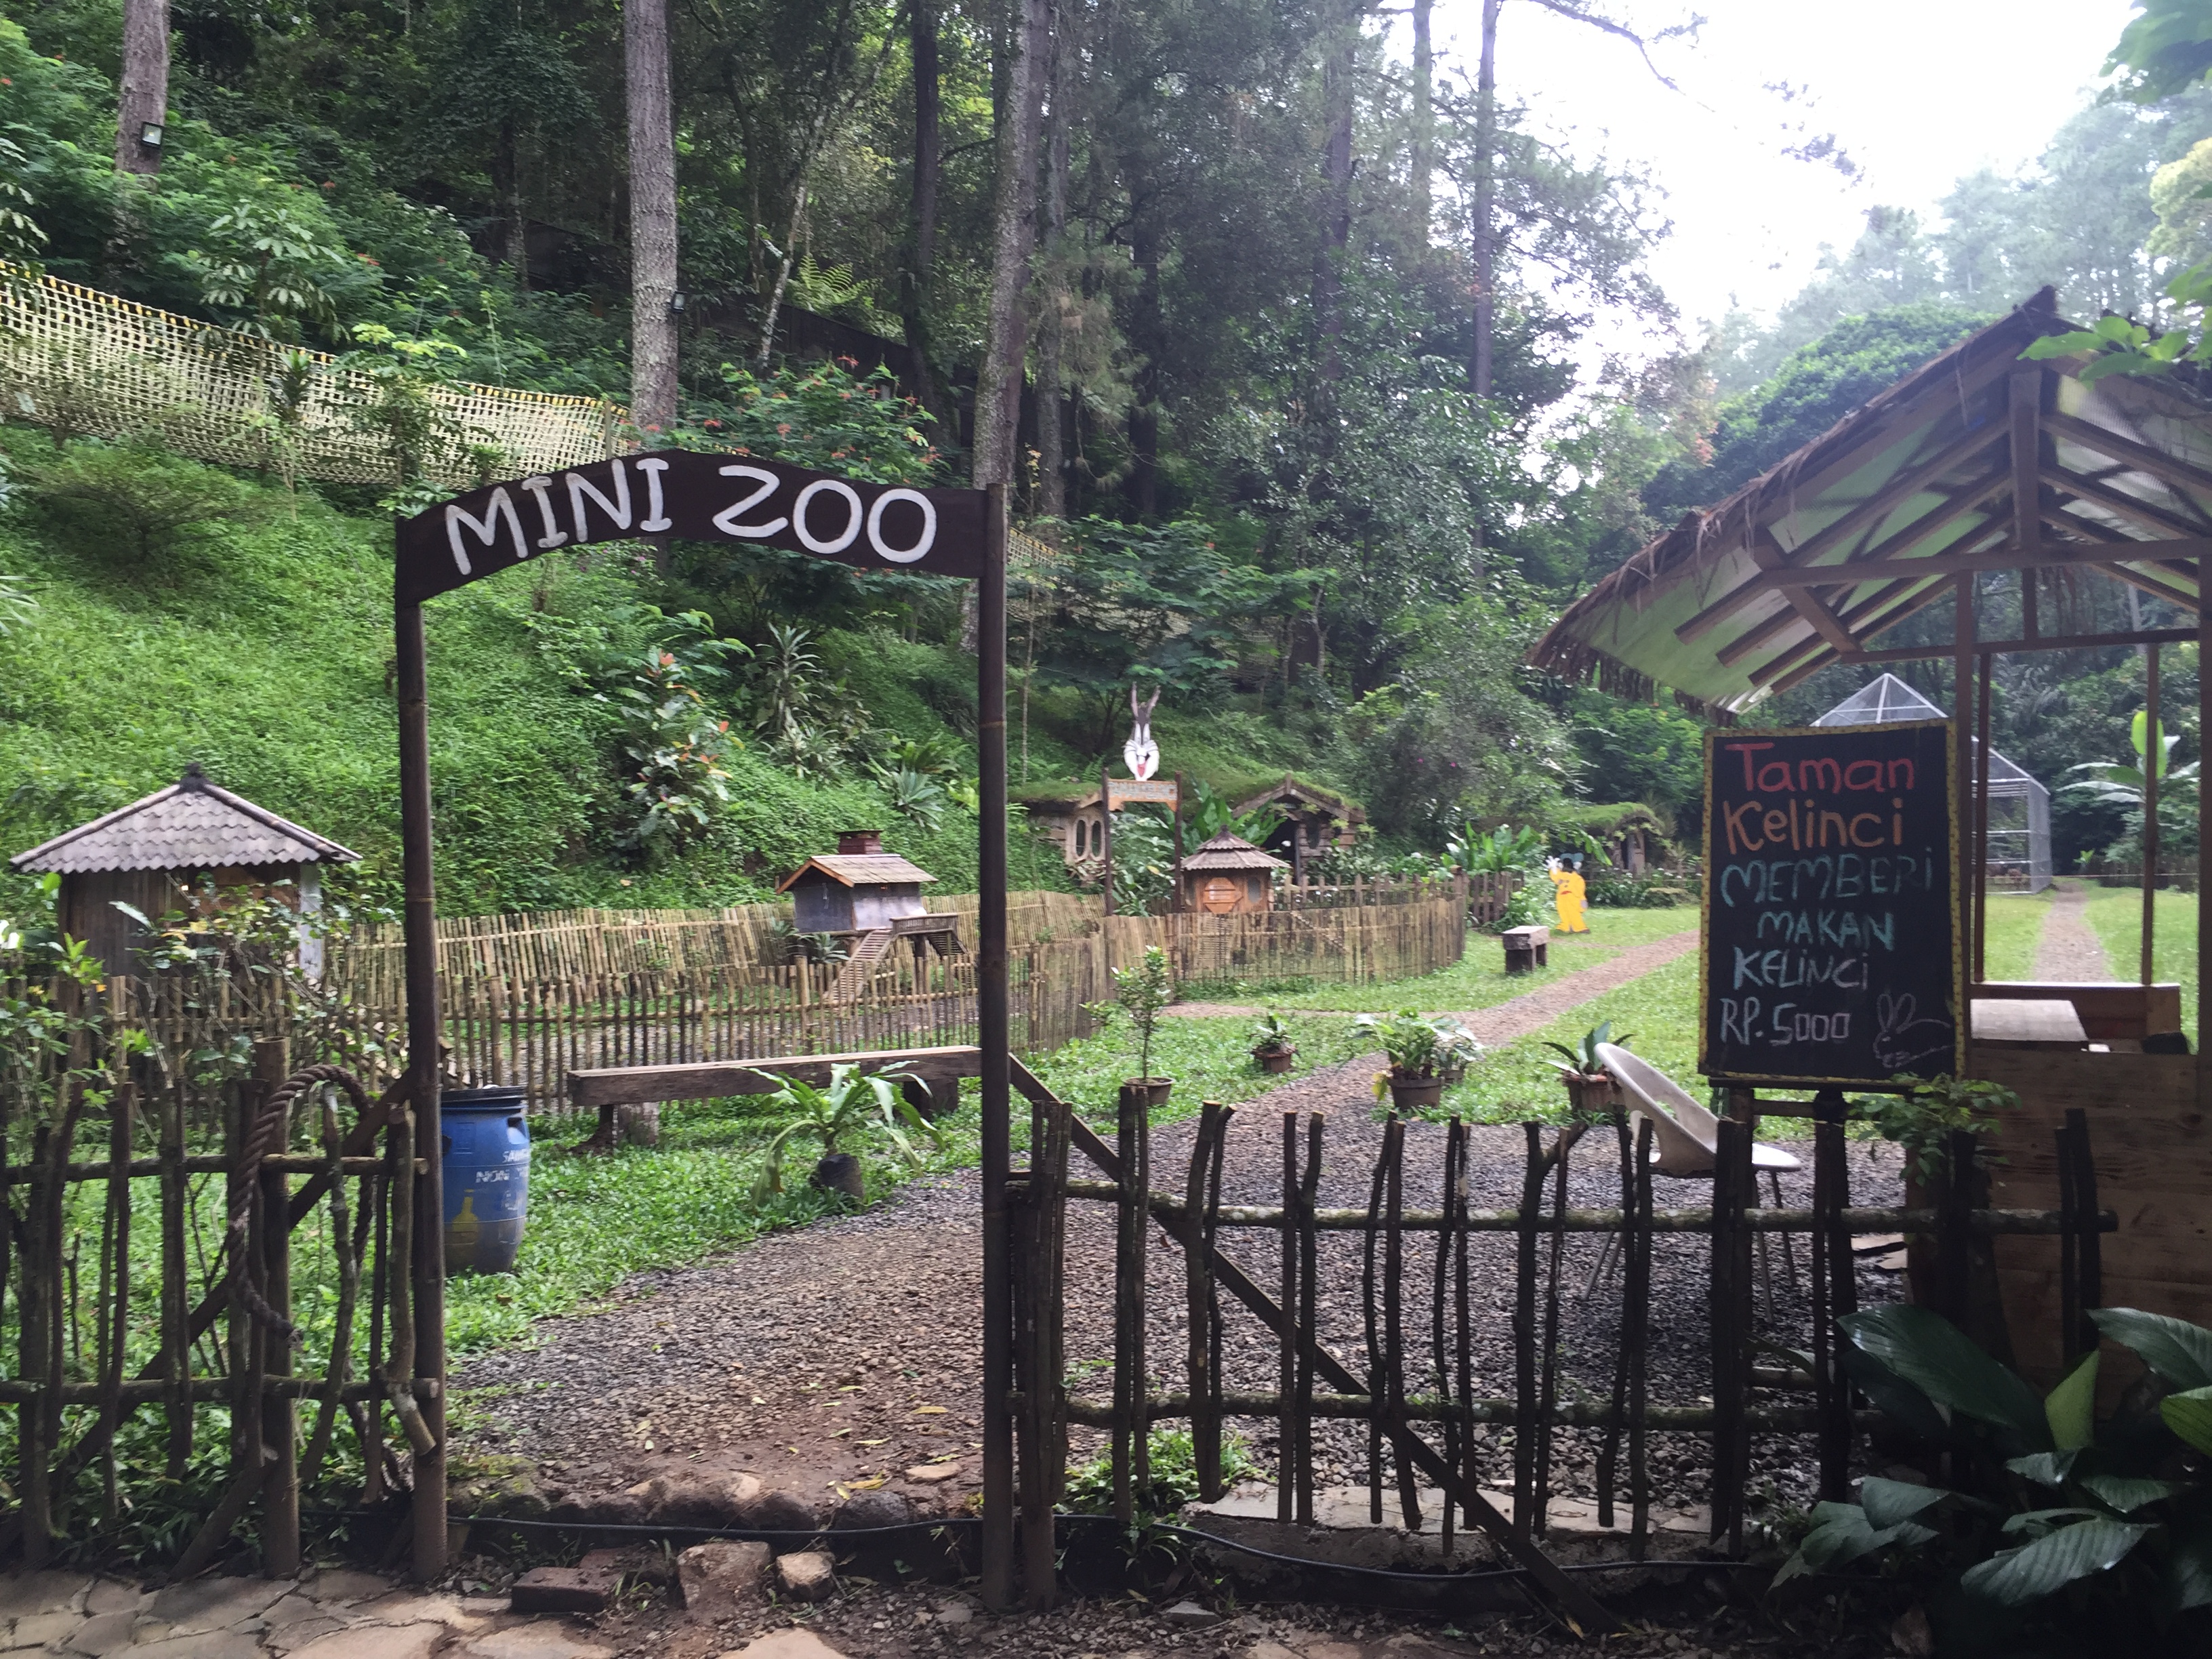 Mini Zoo